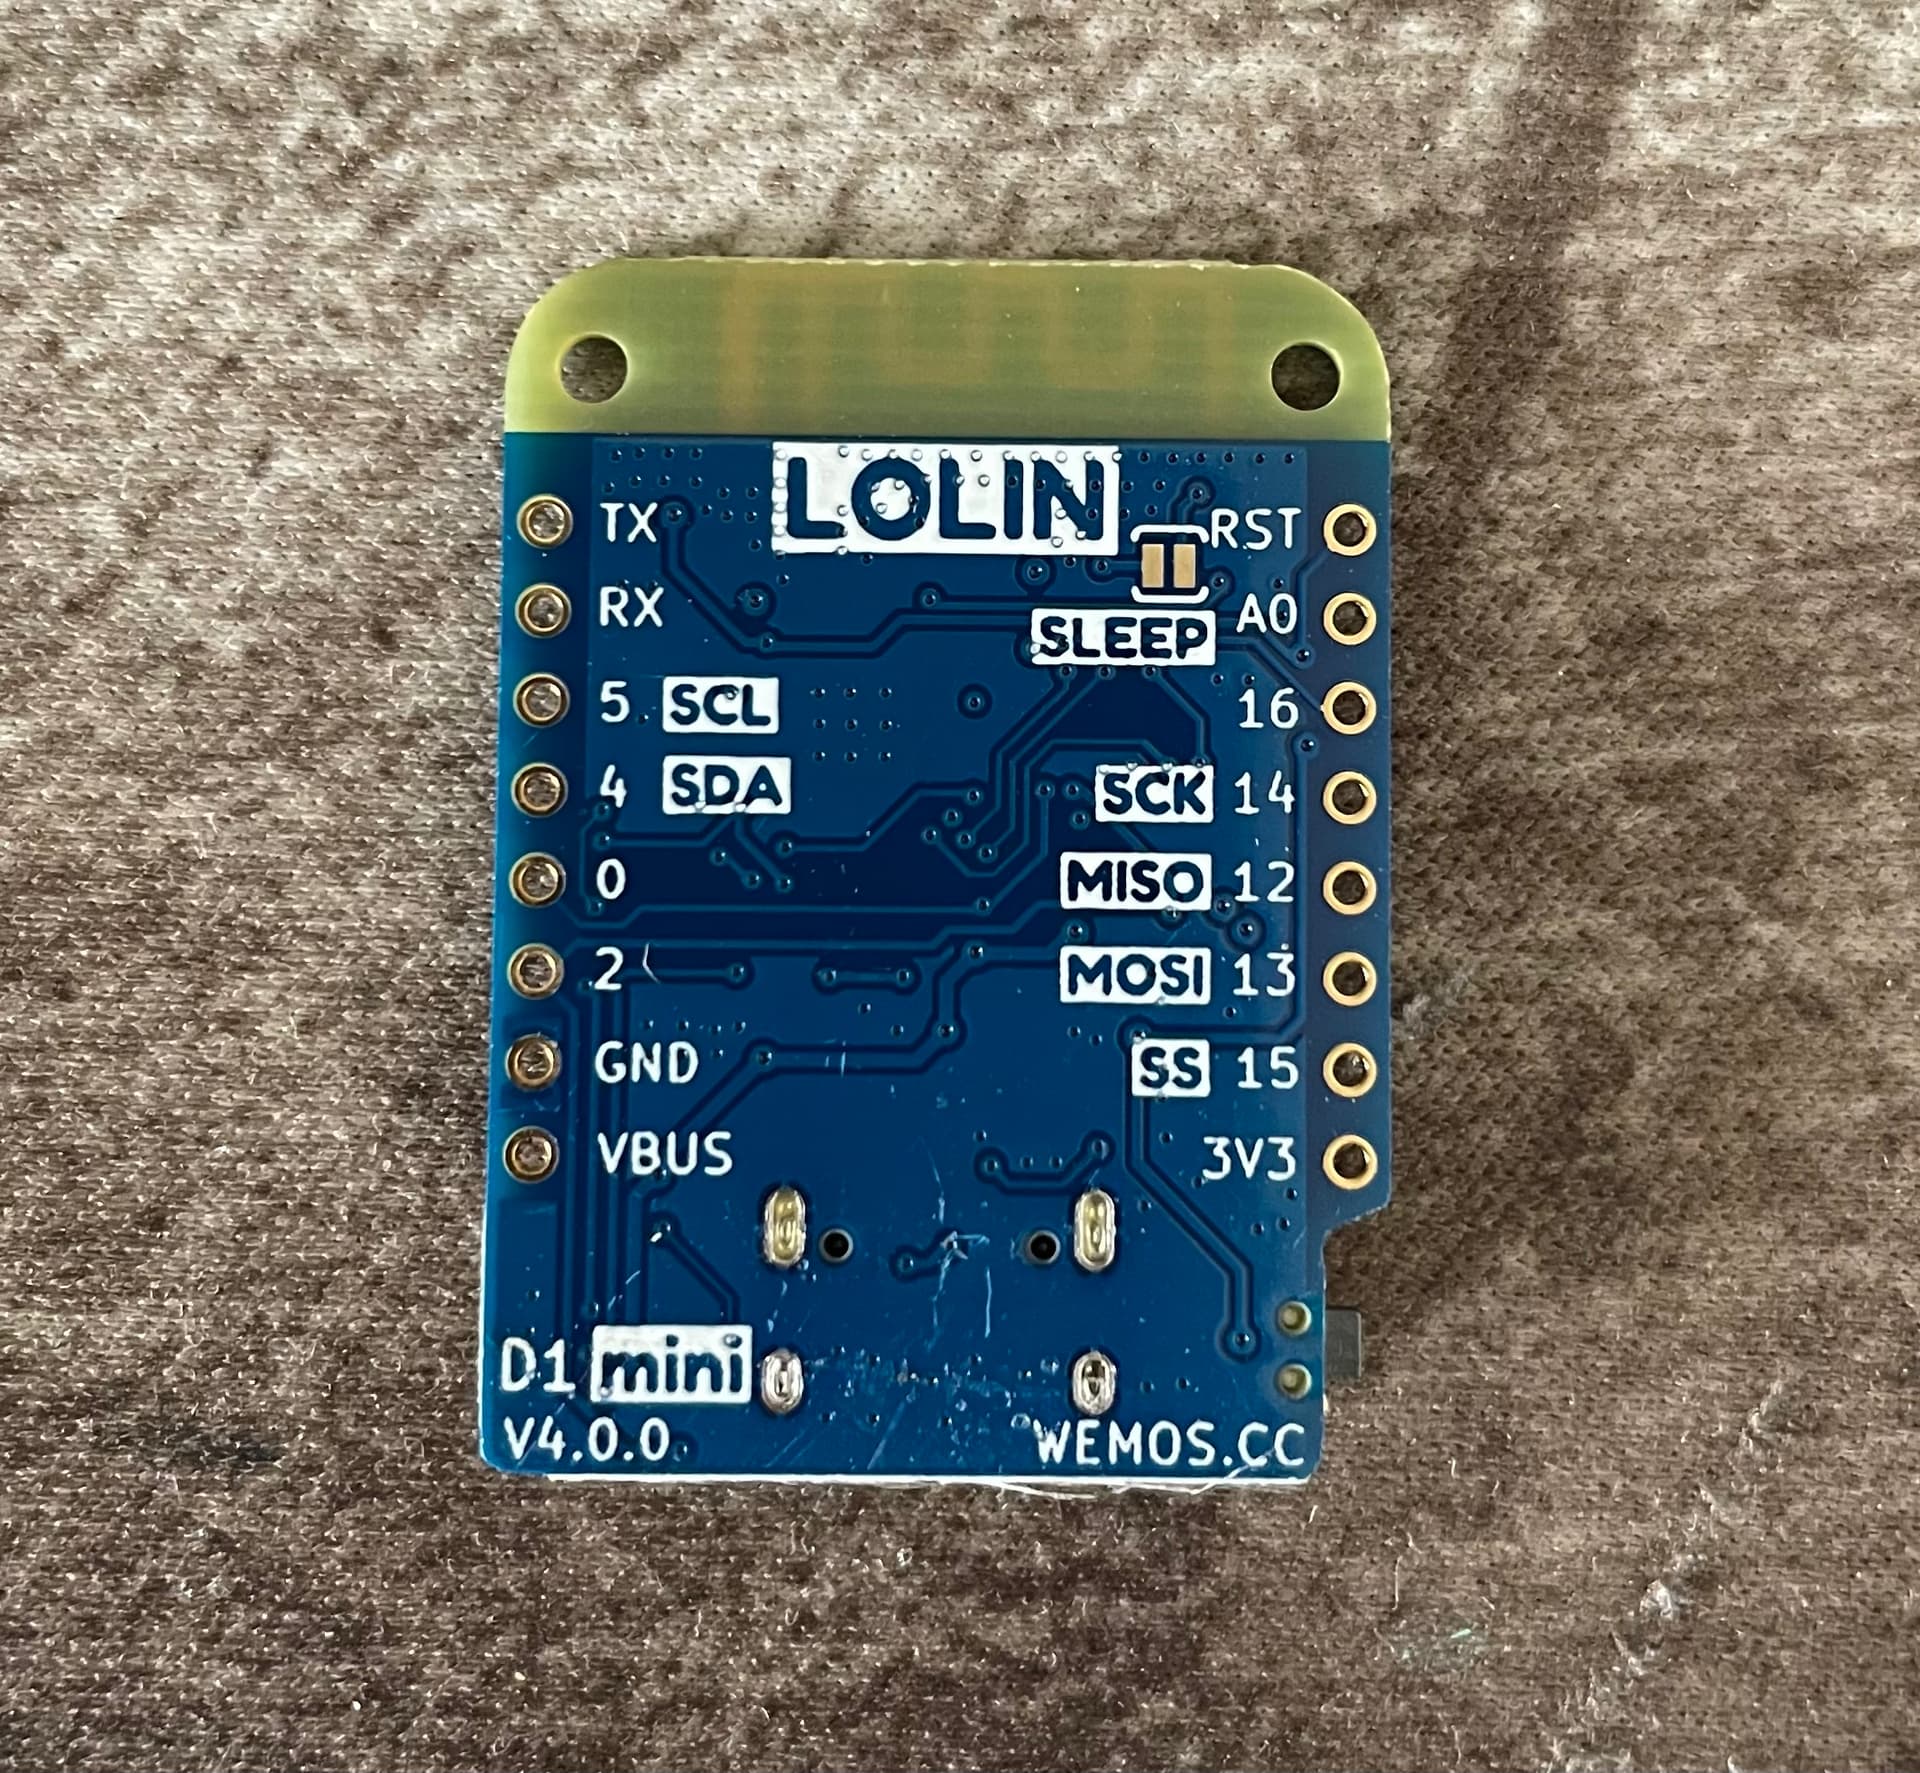 LOLIN D1 Mini V4.0.0 - WEMOS WIFI Internet of Things Board based